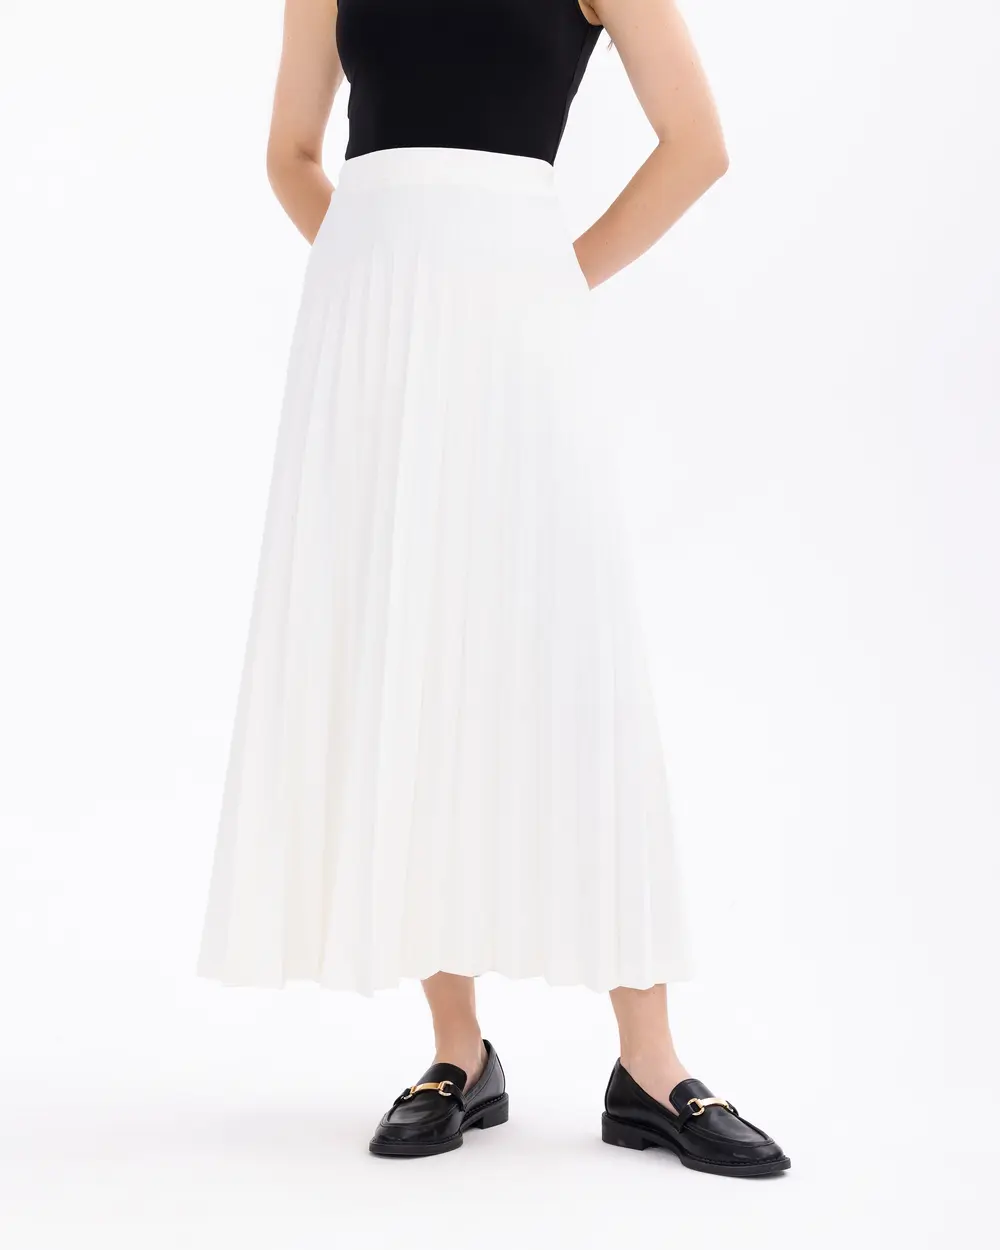 Pleated Knit Fabric Skirt with Elastic Waist